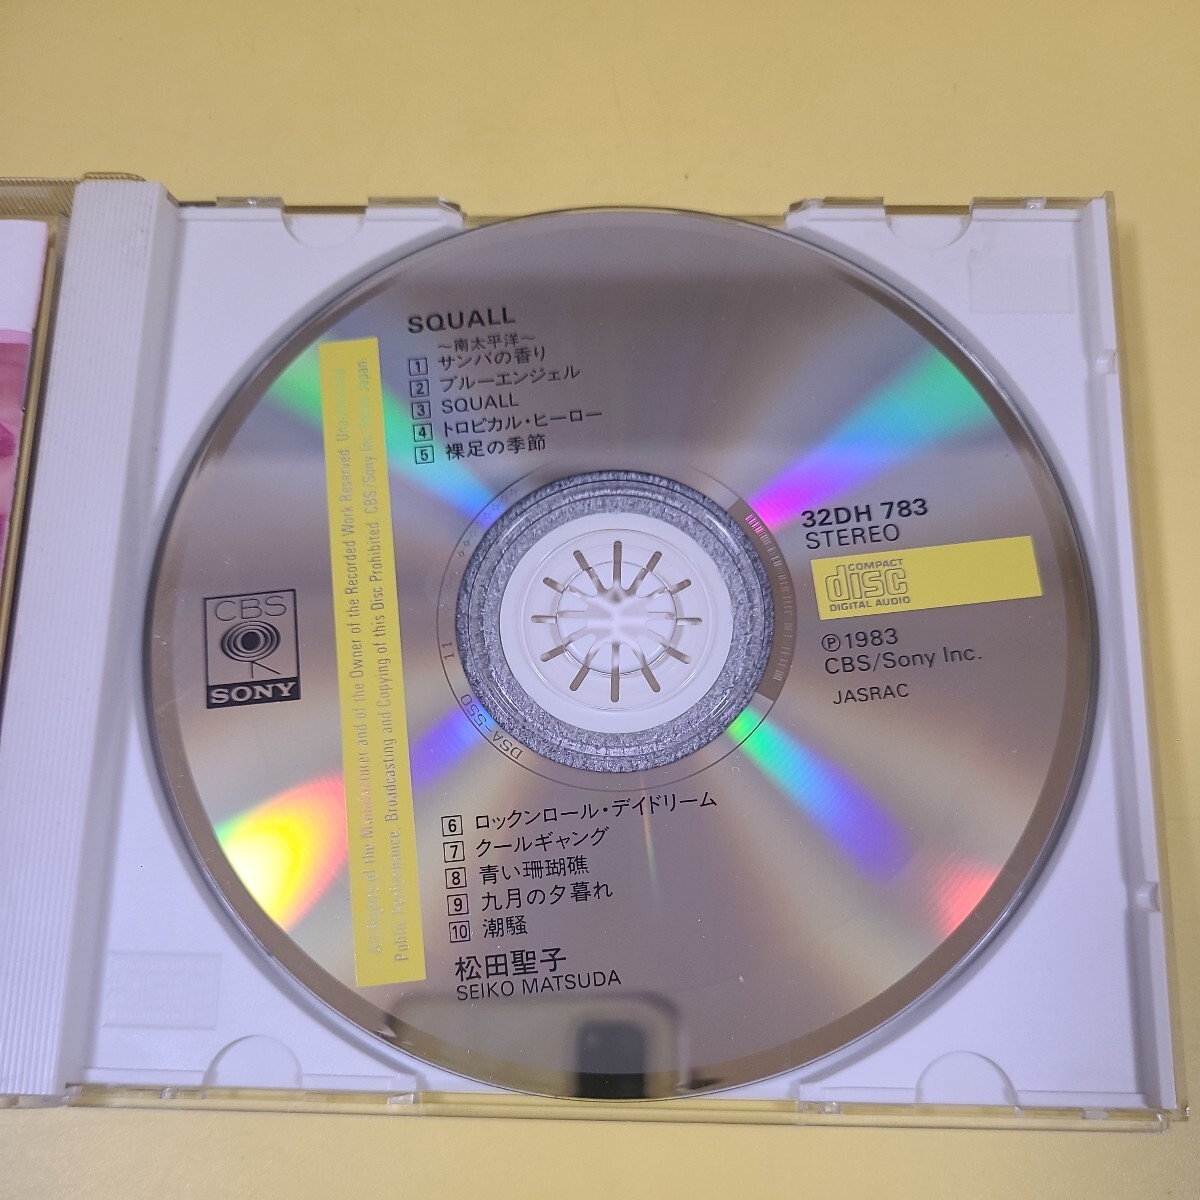 90◆◇CD 松田聖子 SQUALL 32DH-783 CD □◇◆の画像2